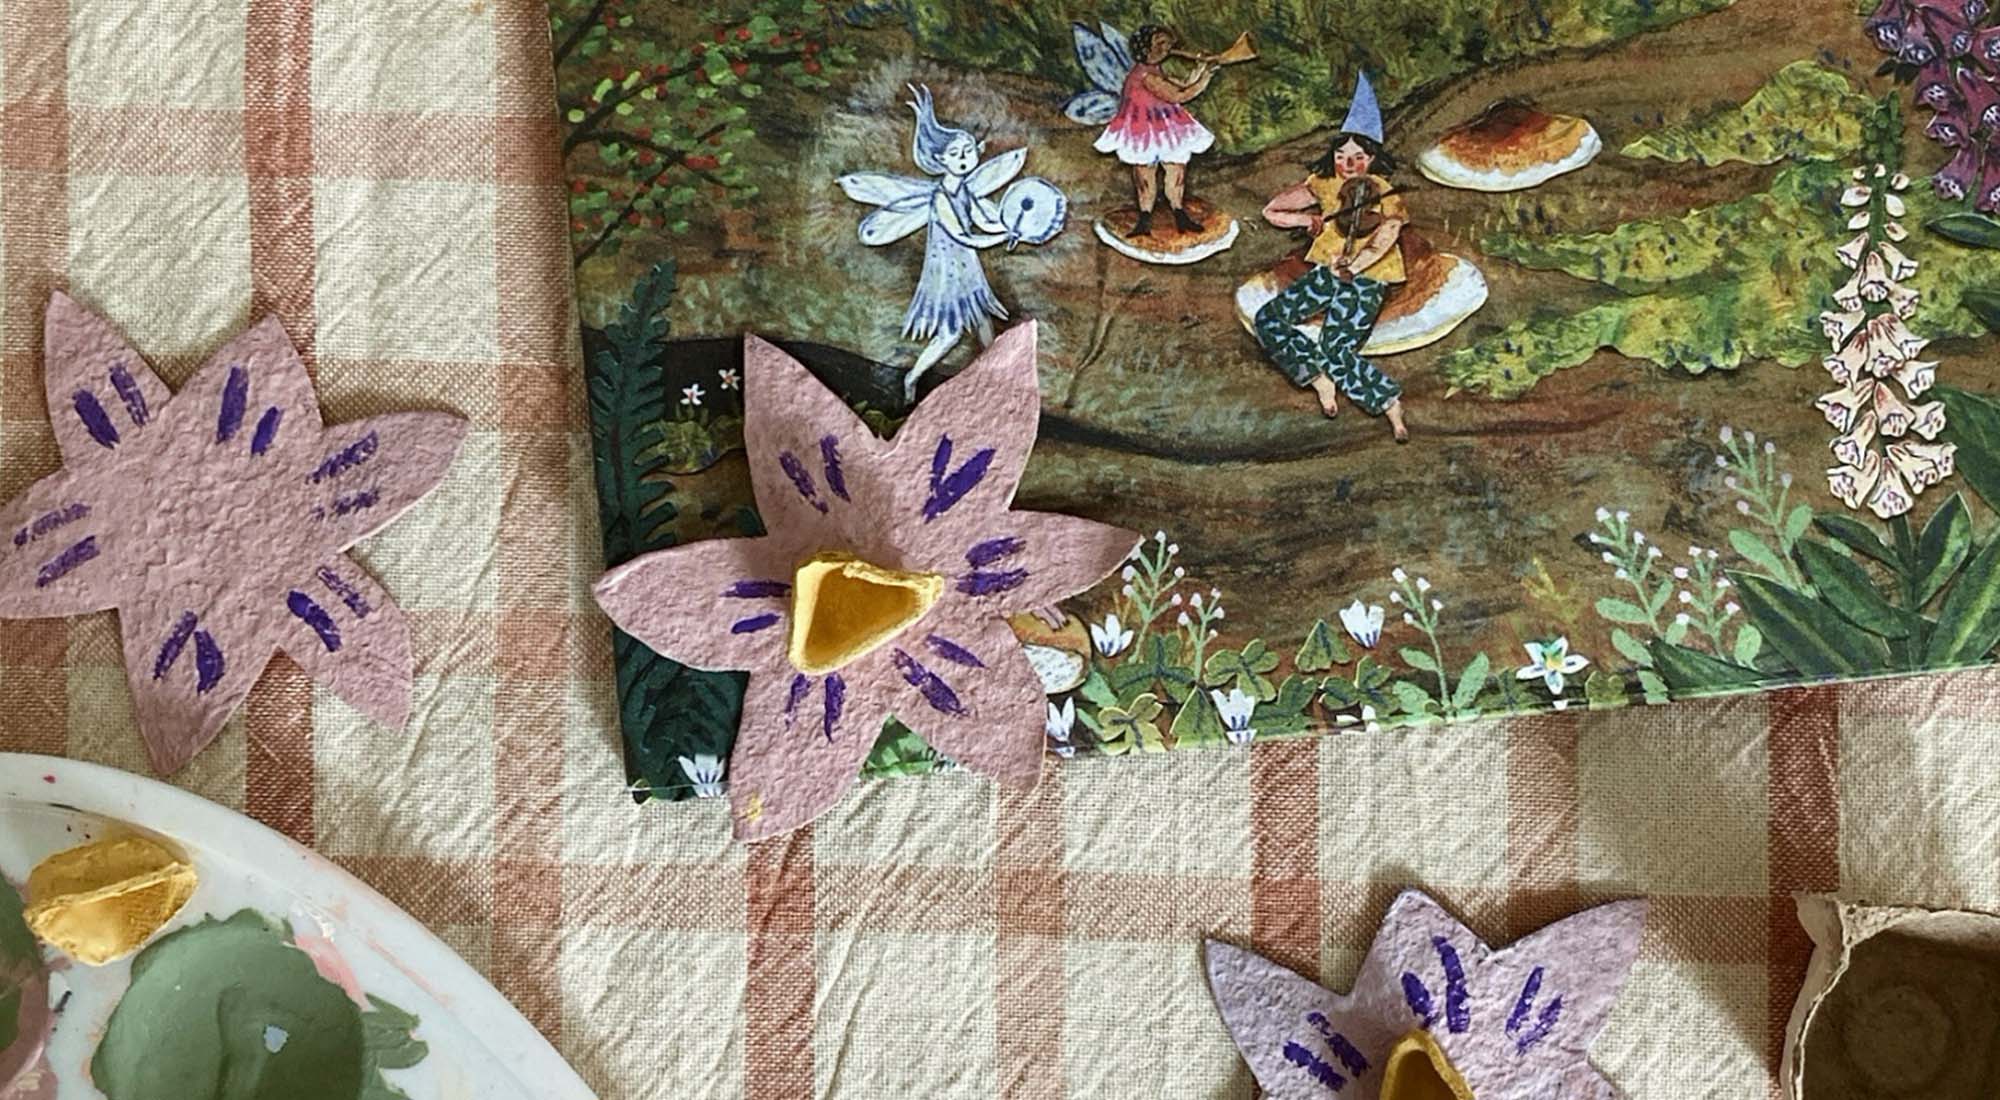 Backyard Fairies Book Craft